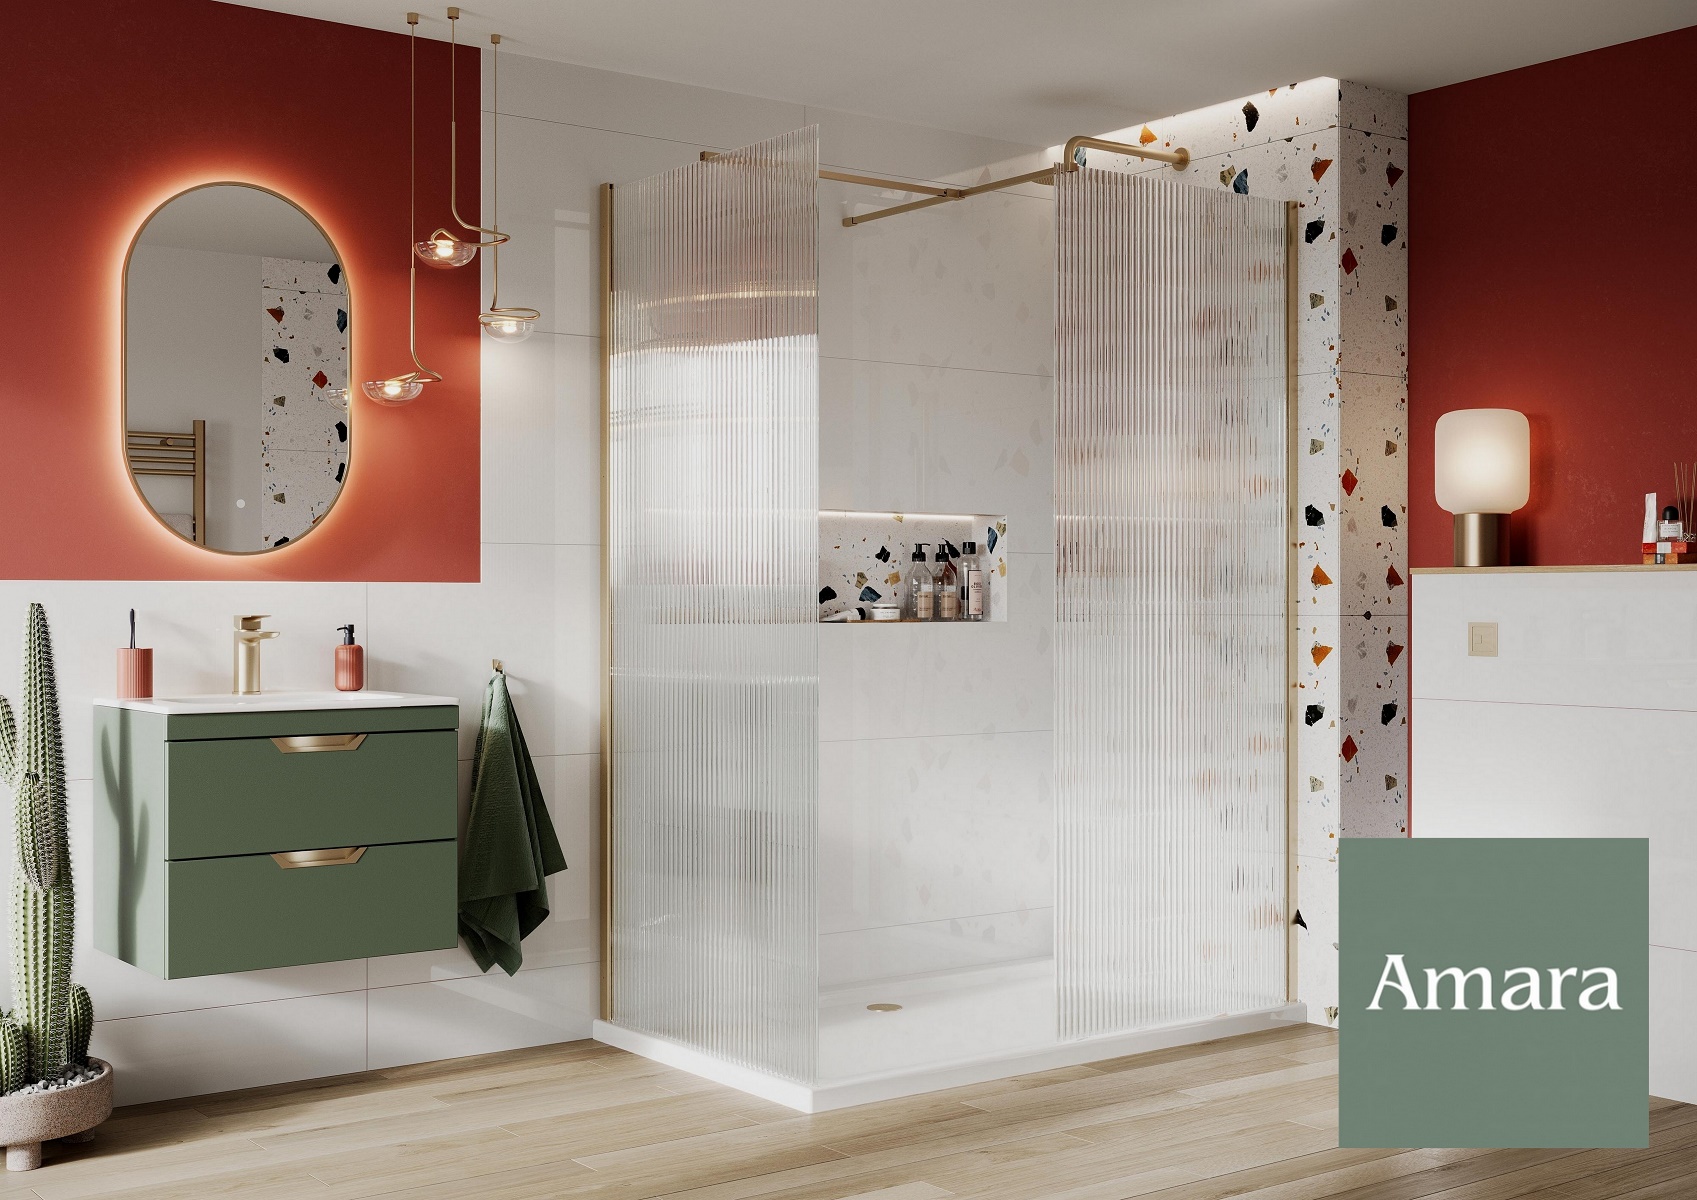 Amara Bathrooms